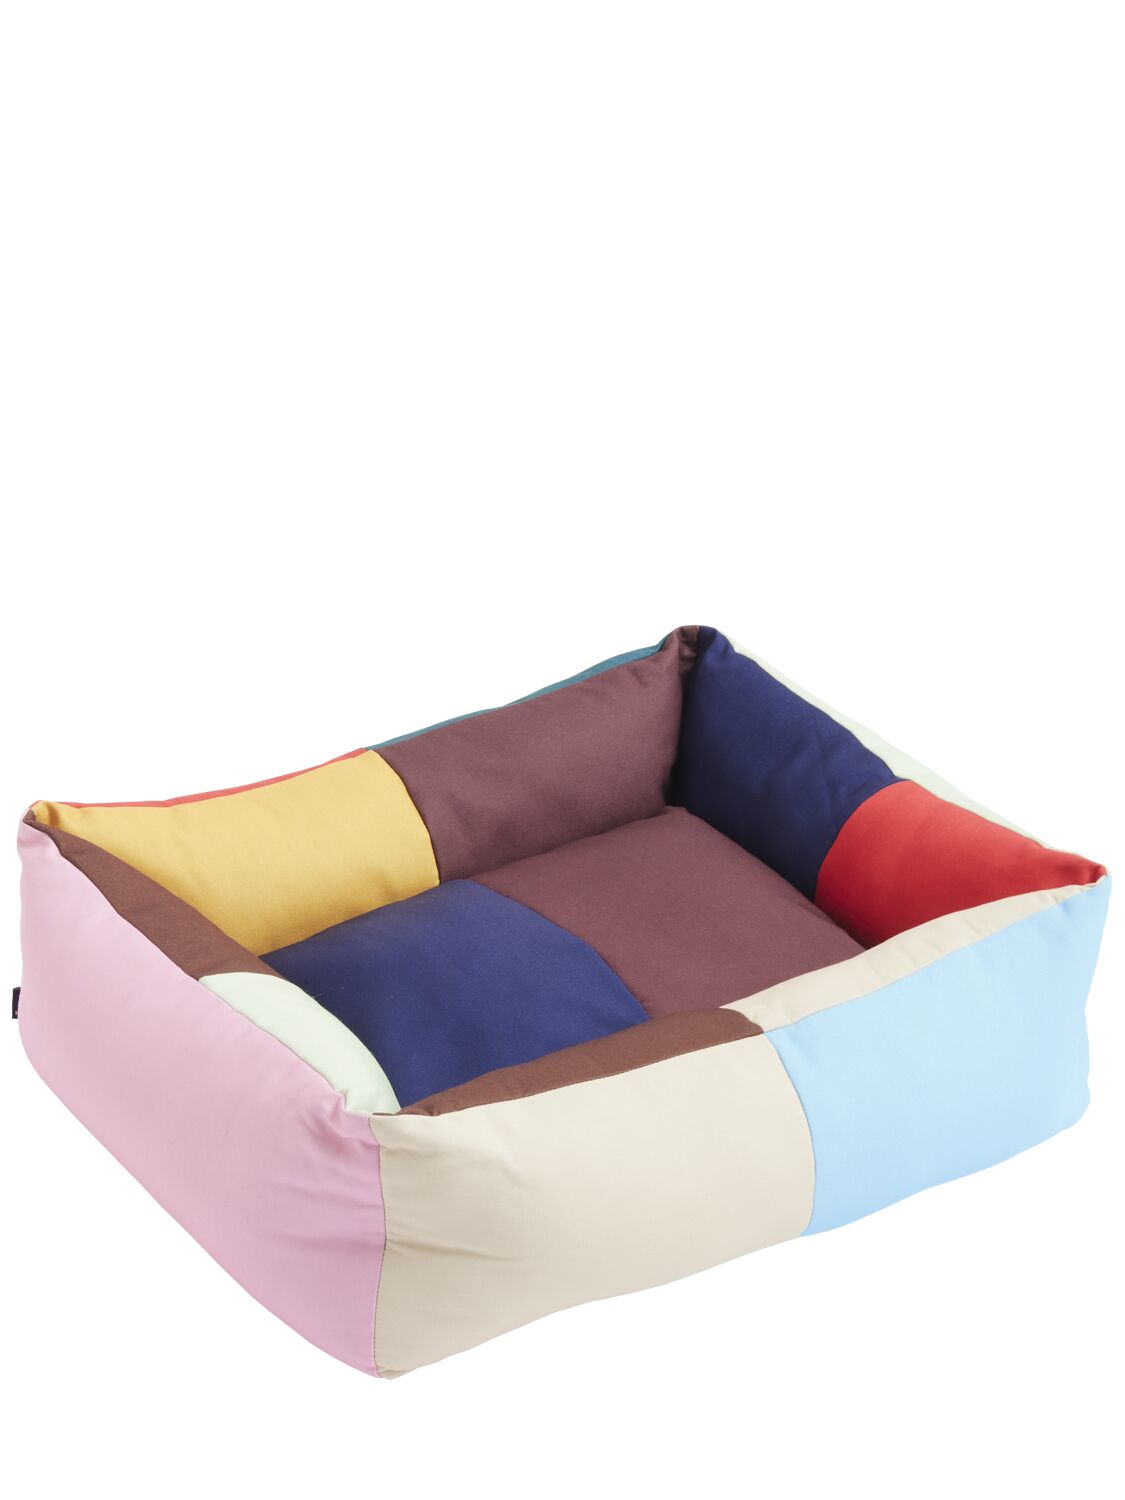 Hay Small Dog Bed In Multicolor